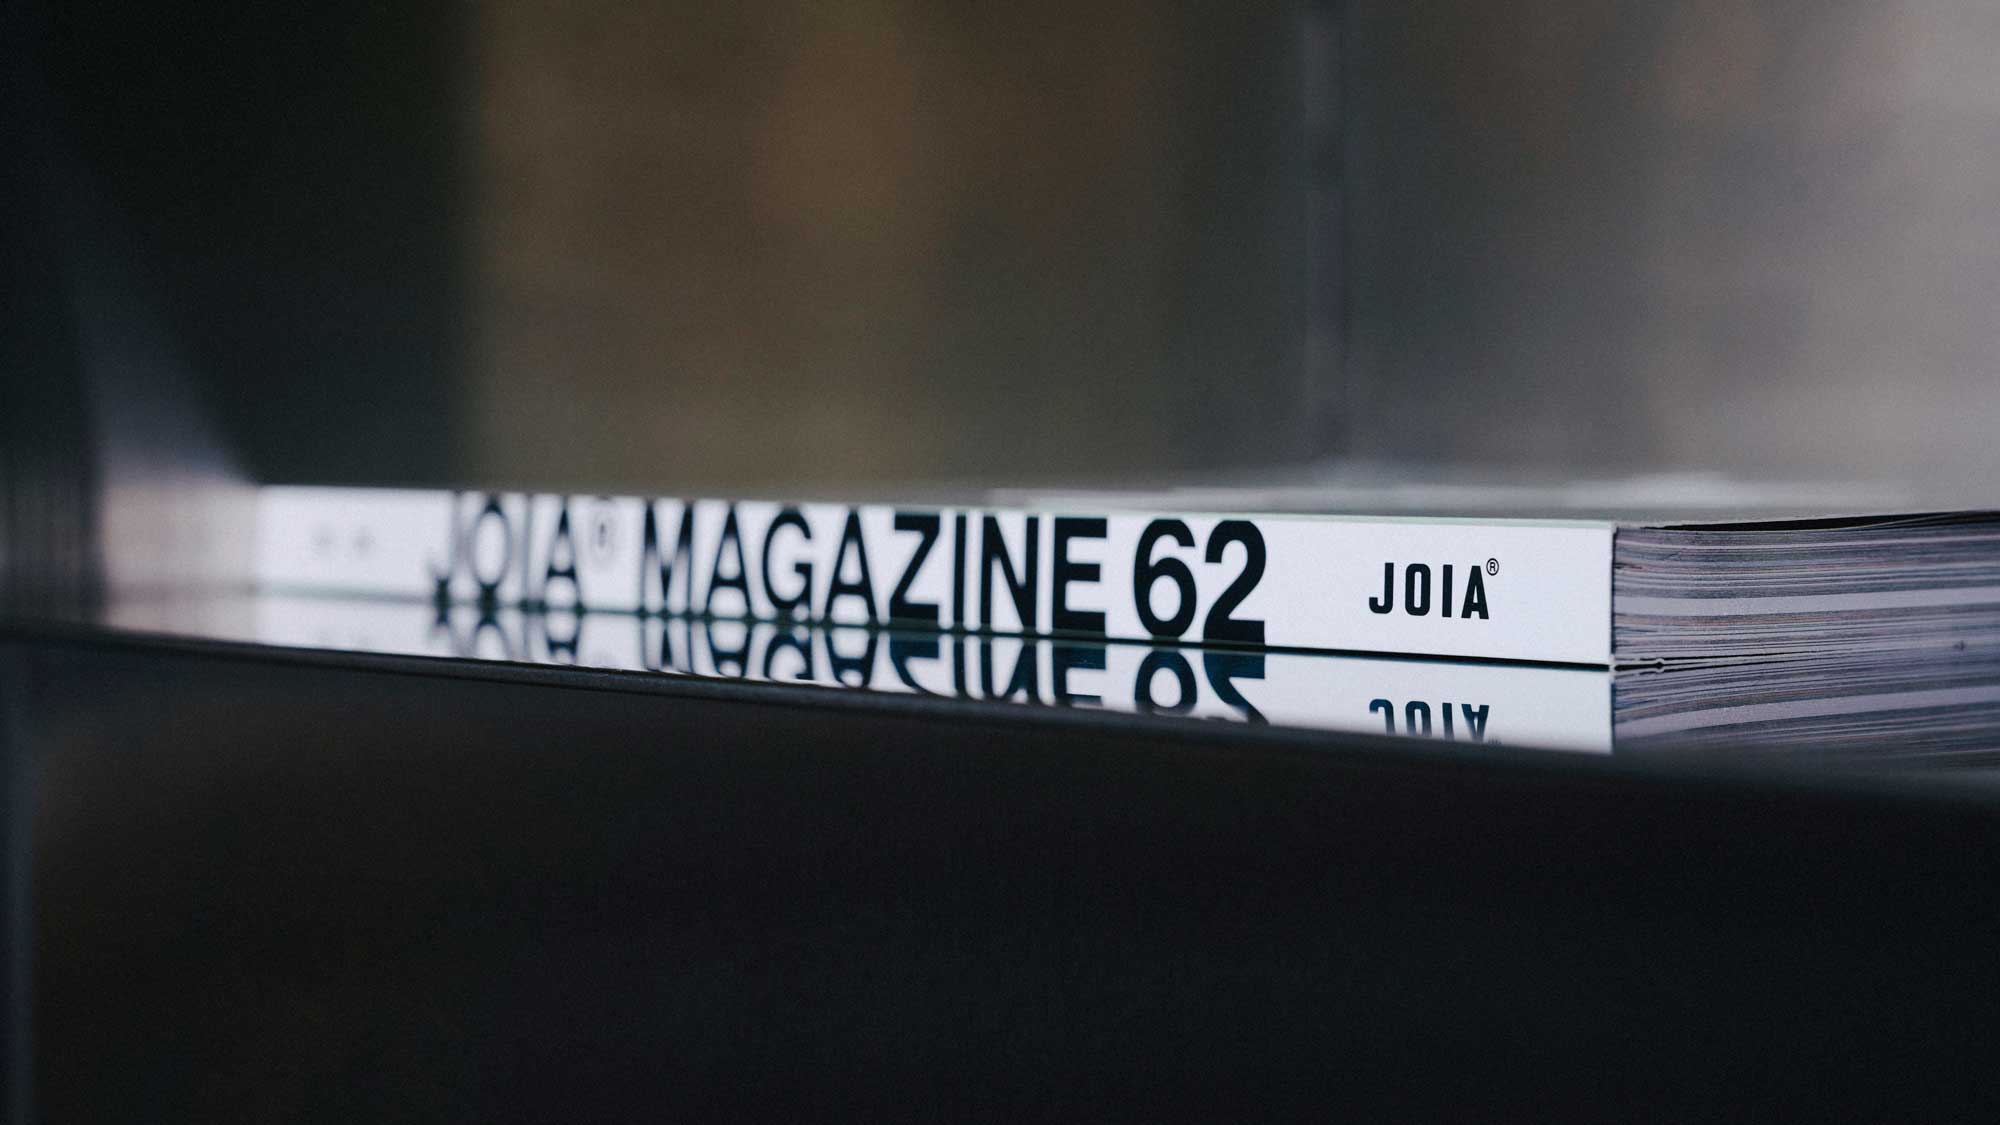 joia magazine 62